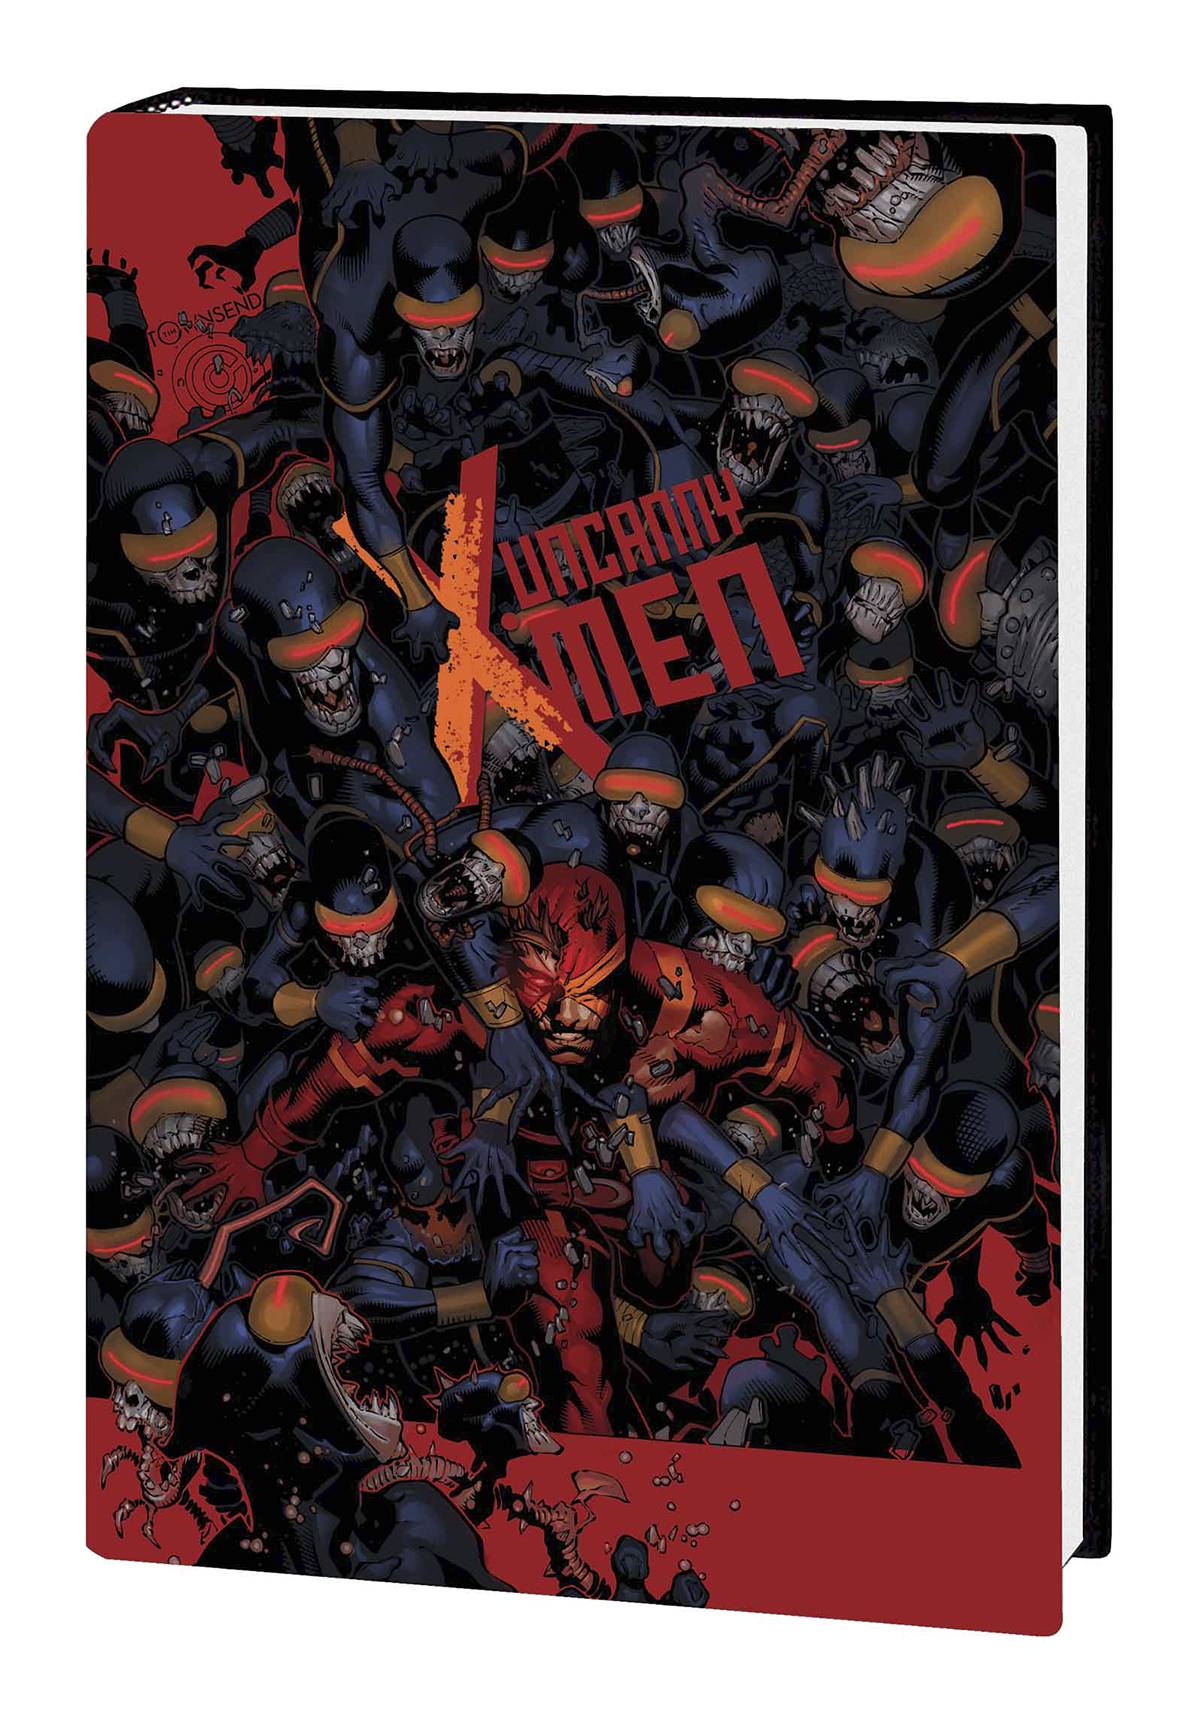 Uncanny X-Men Premiere Hardcover Volume 5 Omega Mutant